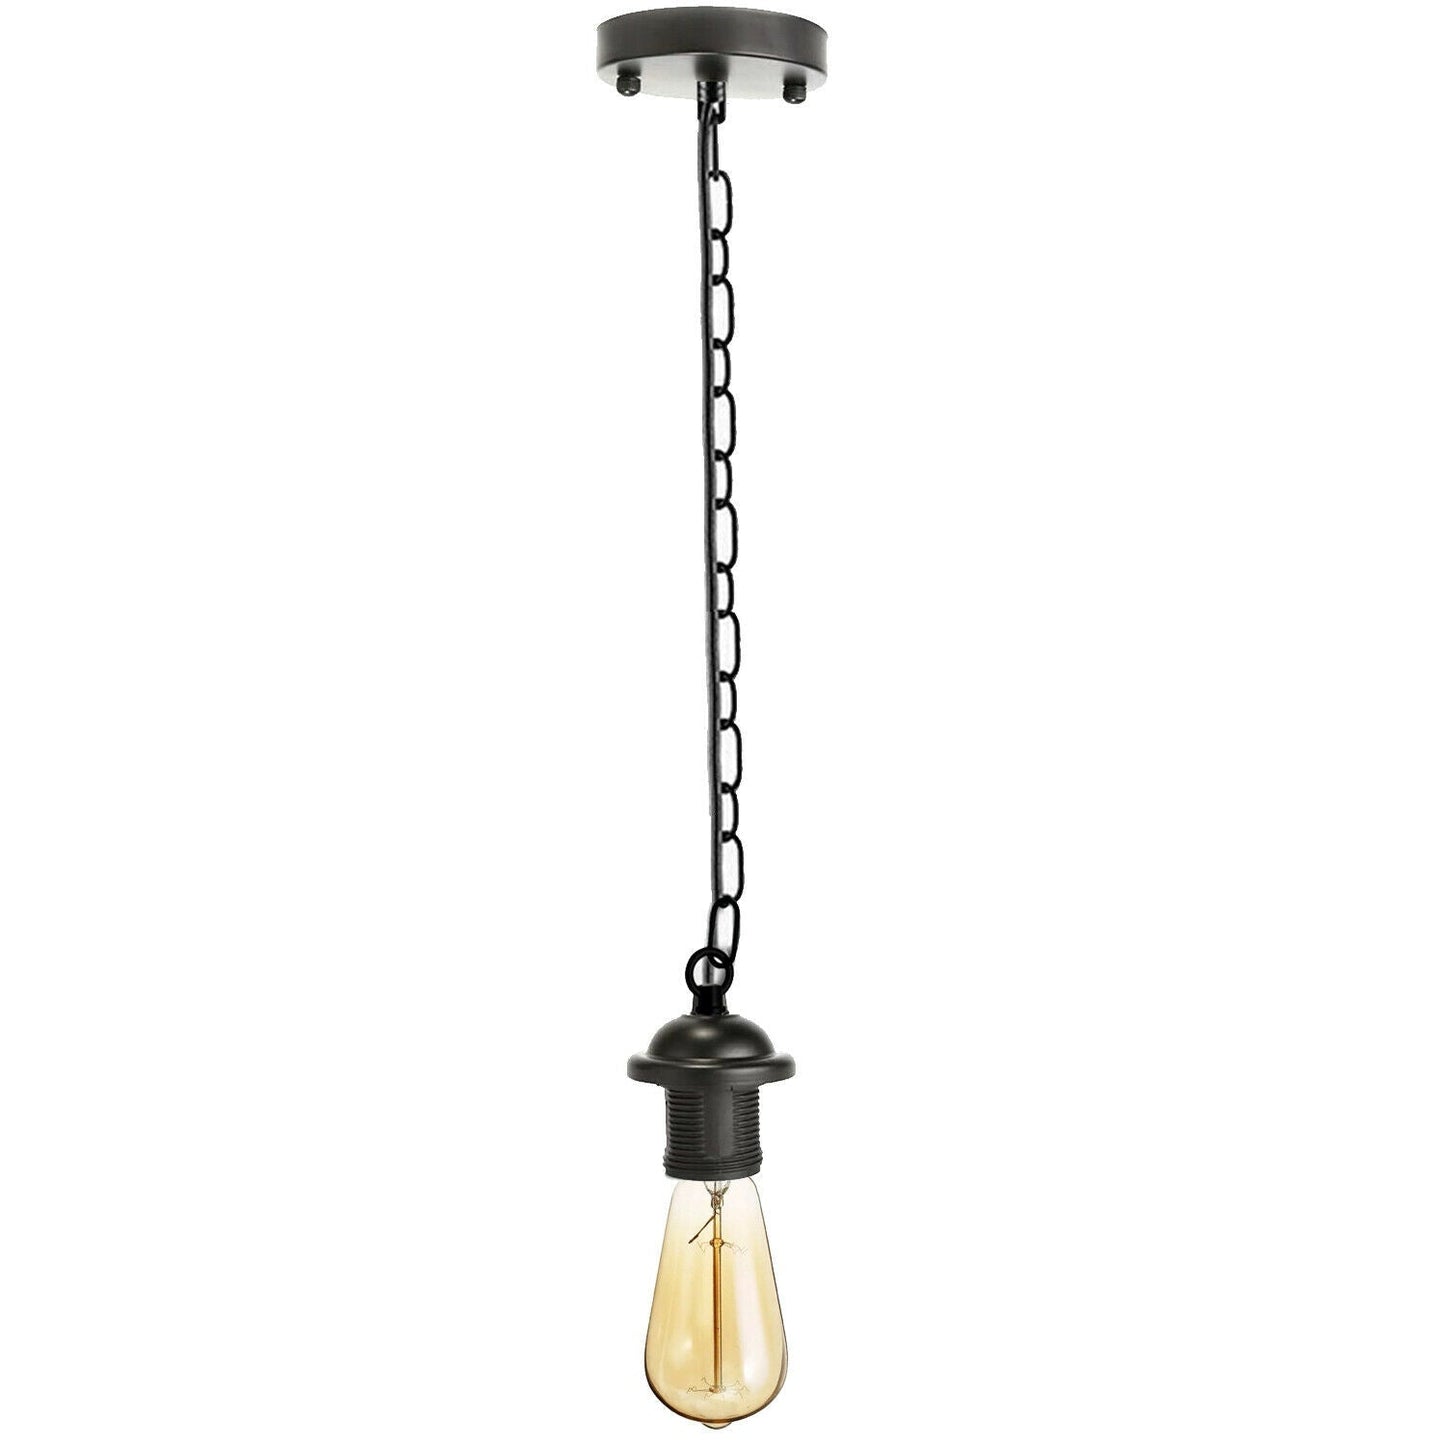 Black Metal Ceiing E27 Lamp Holder Pendant Light With Chain